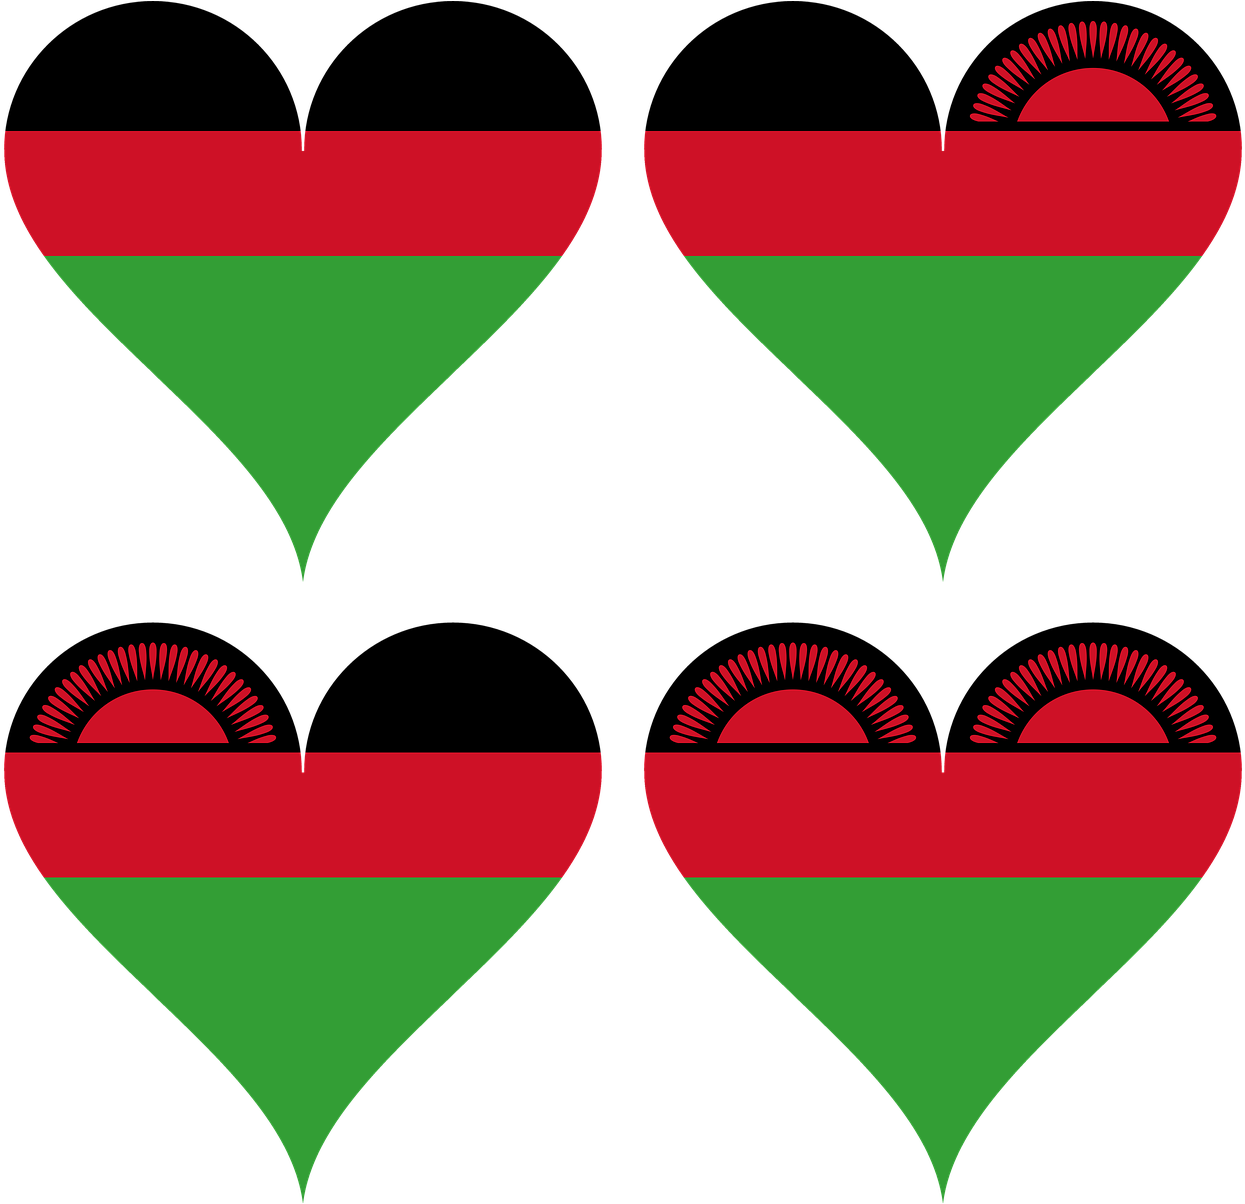 Malawi Flag PNG Isolated Image